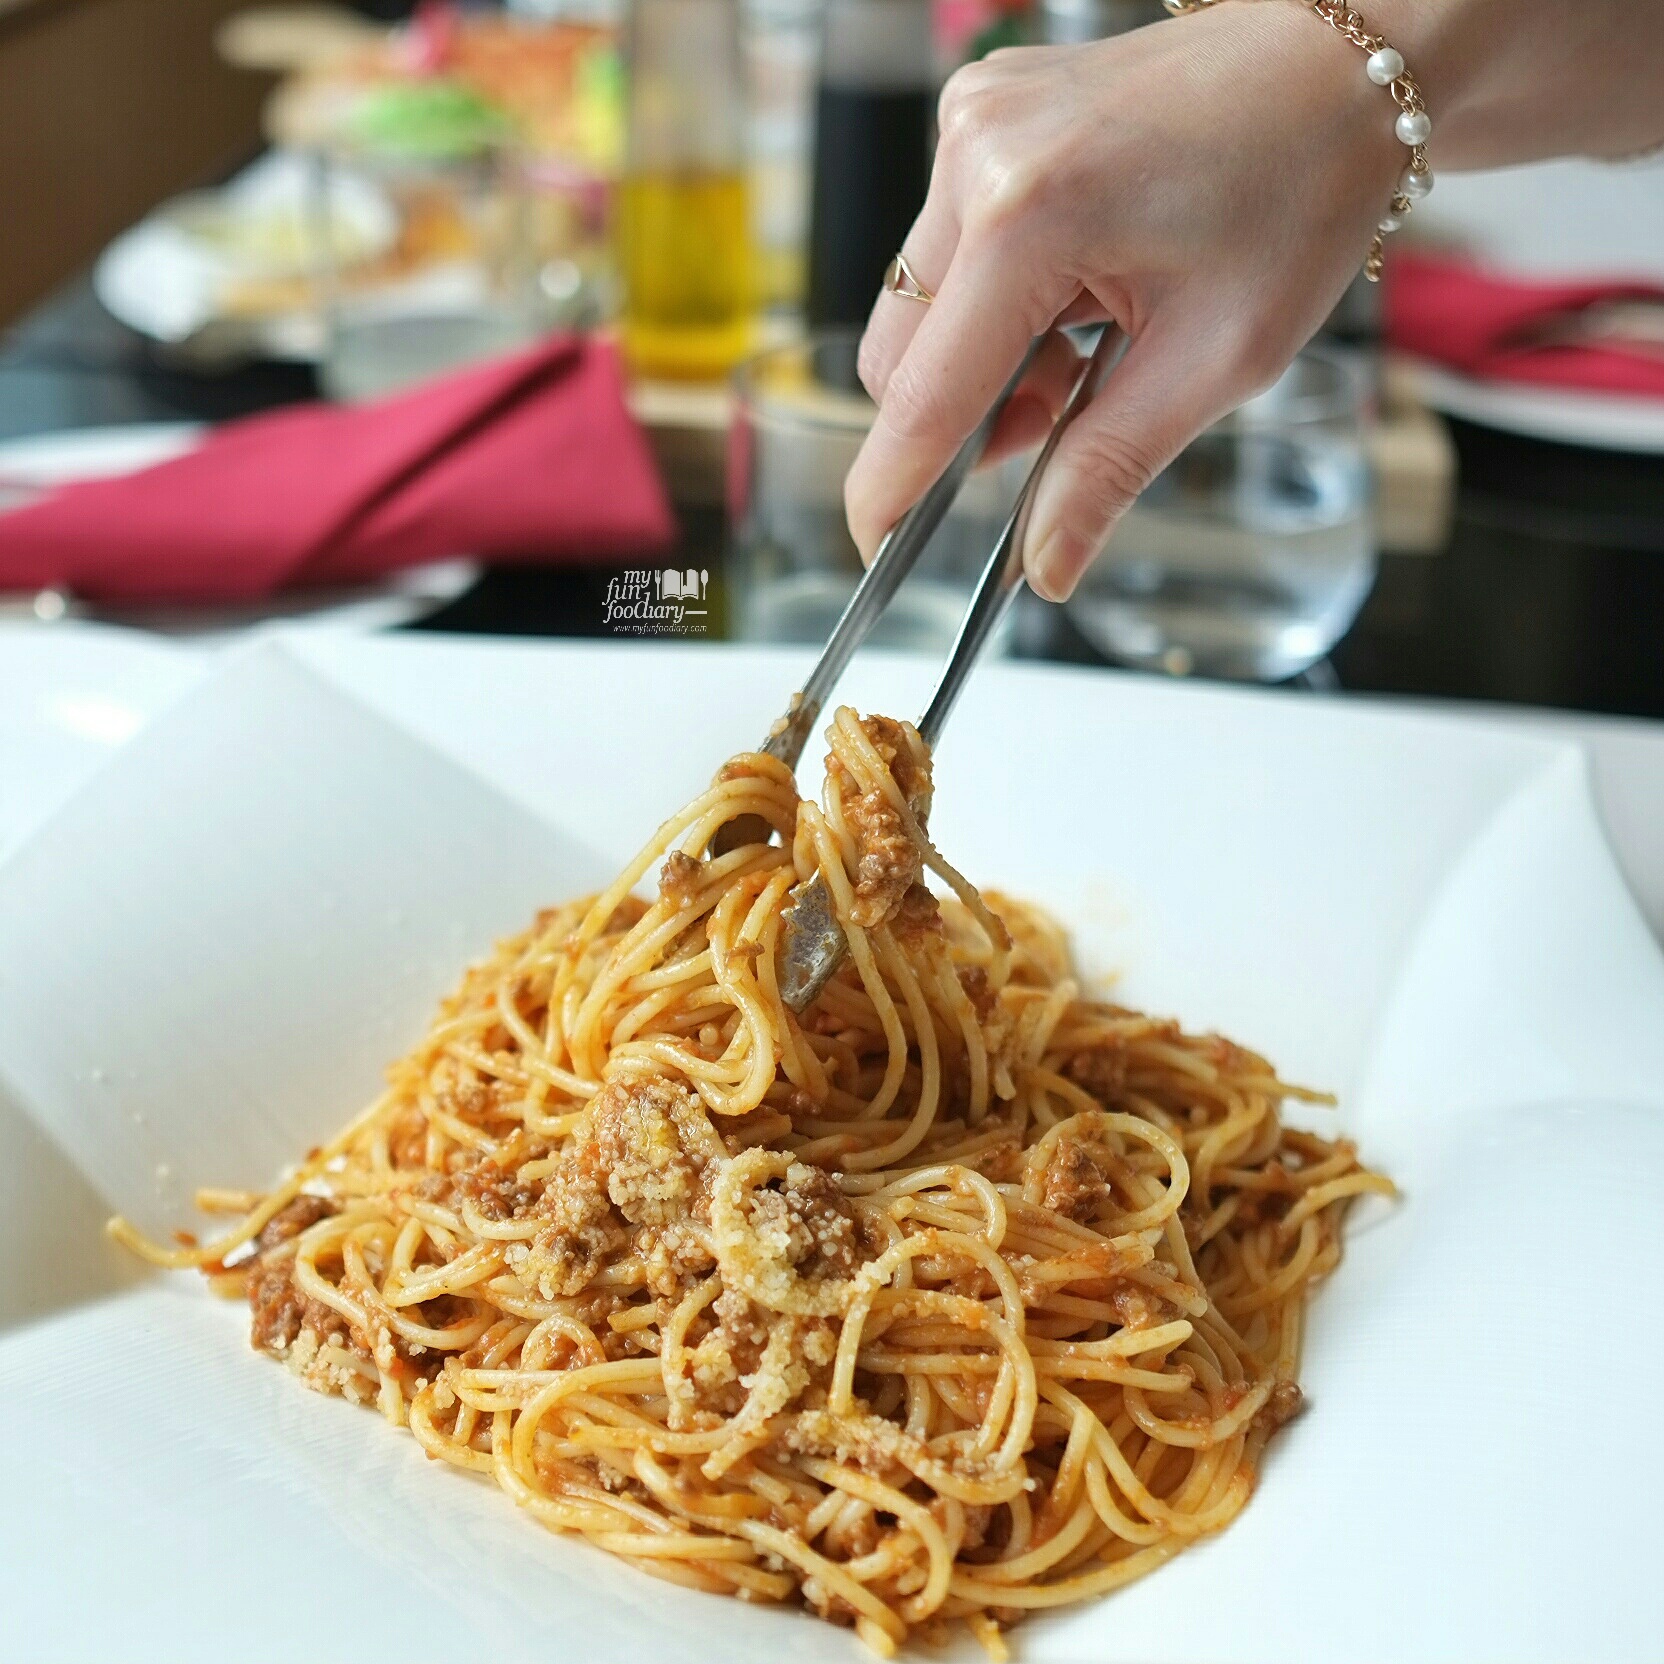 Spaghetti Bolognese at Rosso Shangrila Jakarta by Myfunfoodiary